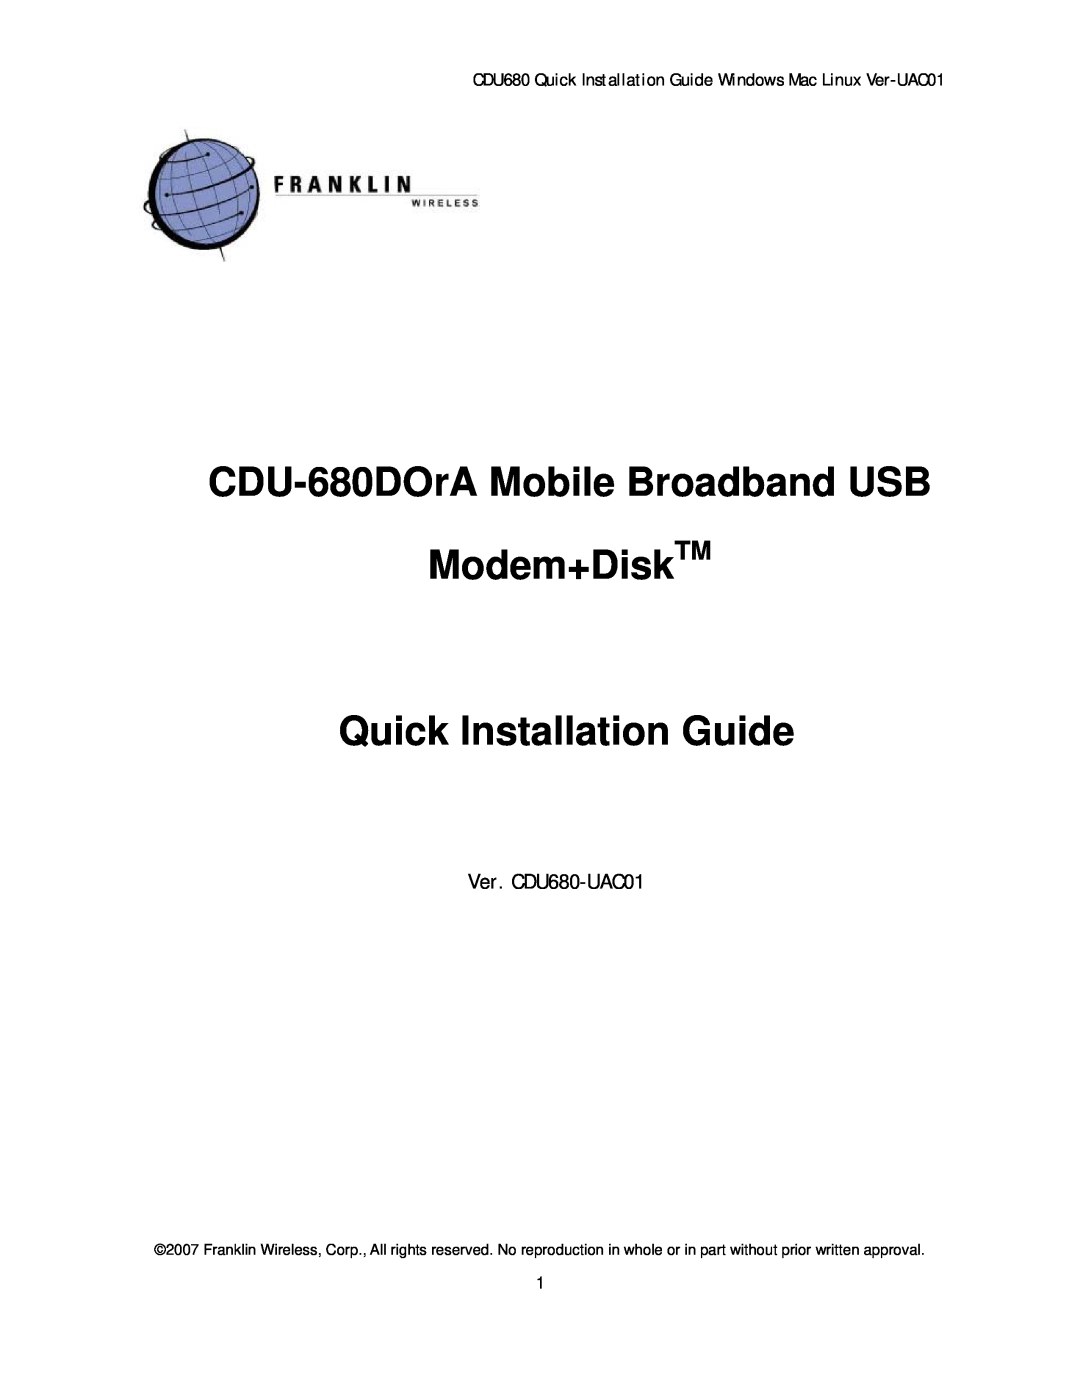 Franklin manual CDU-680DOrA Mobile Broadband USB Modem+DiskTM, Quick Installation Guide, Ver. CDU680-UAC01 